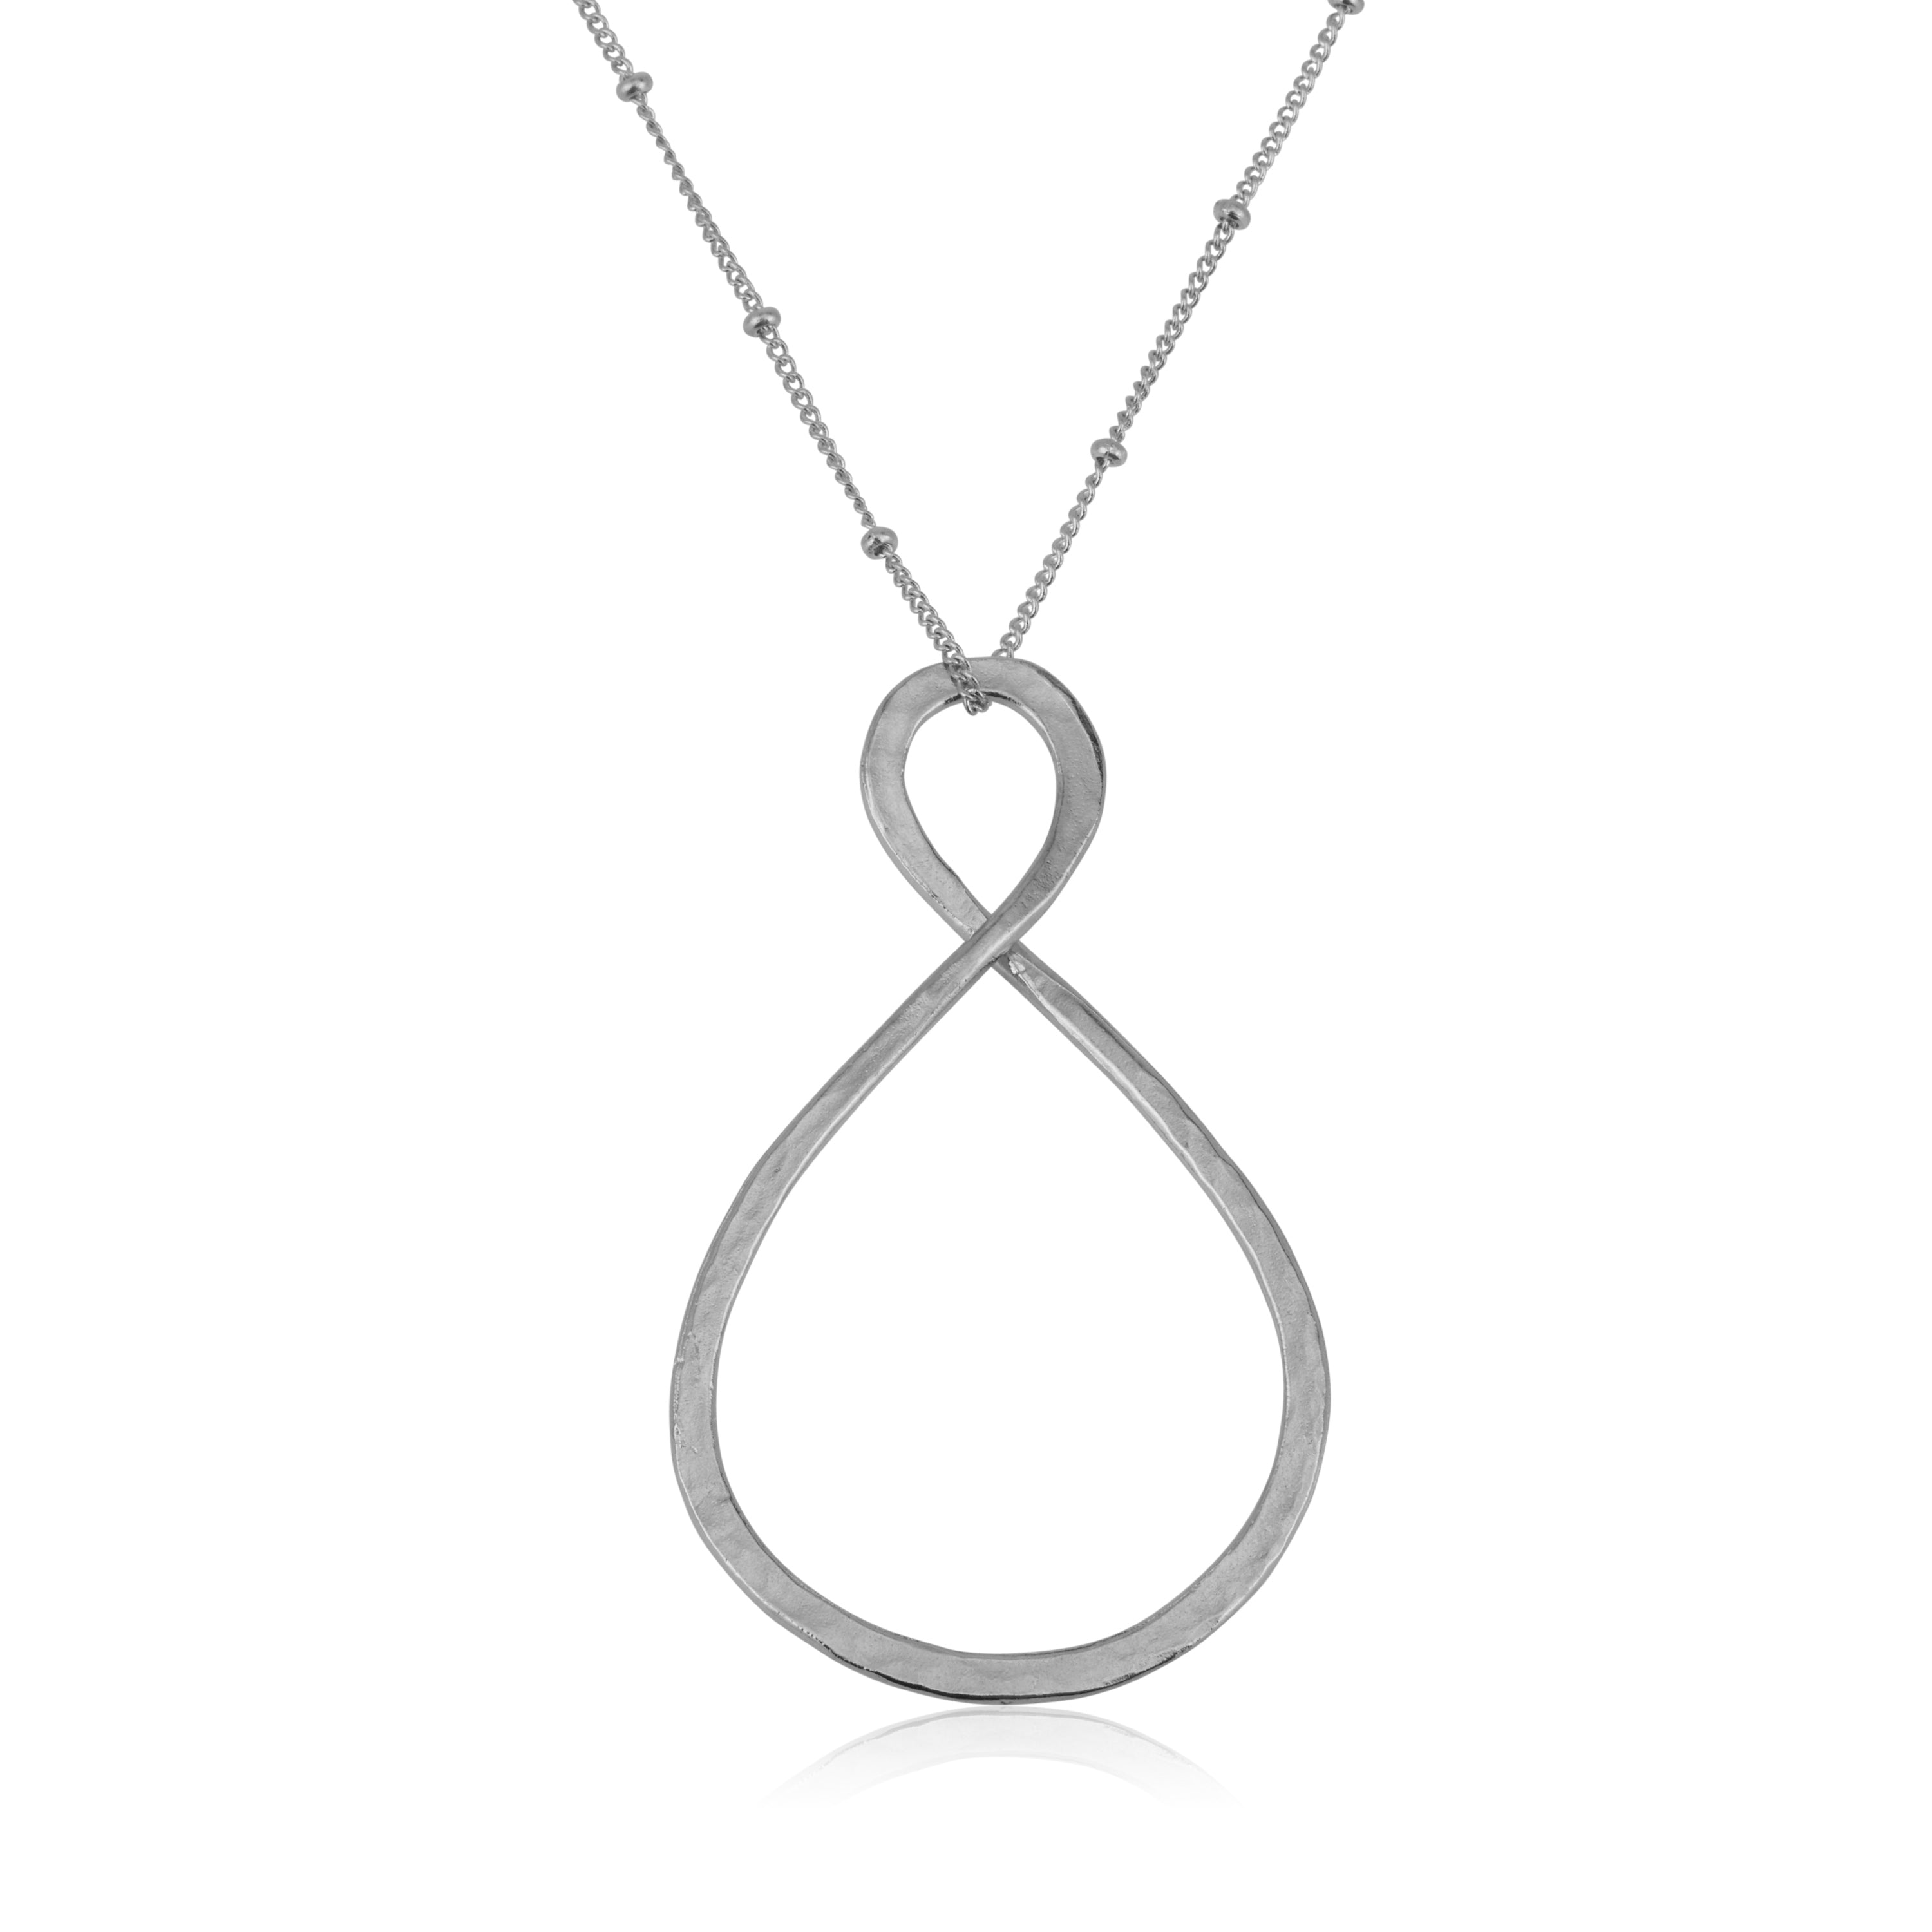 Uniqe asymmetrical large Infinity Necklace